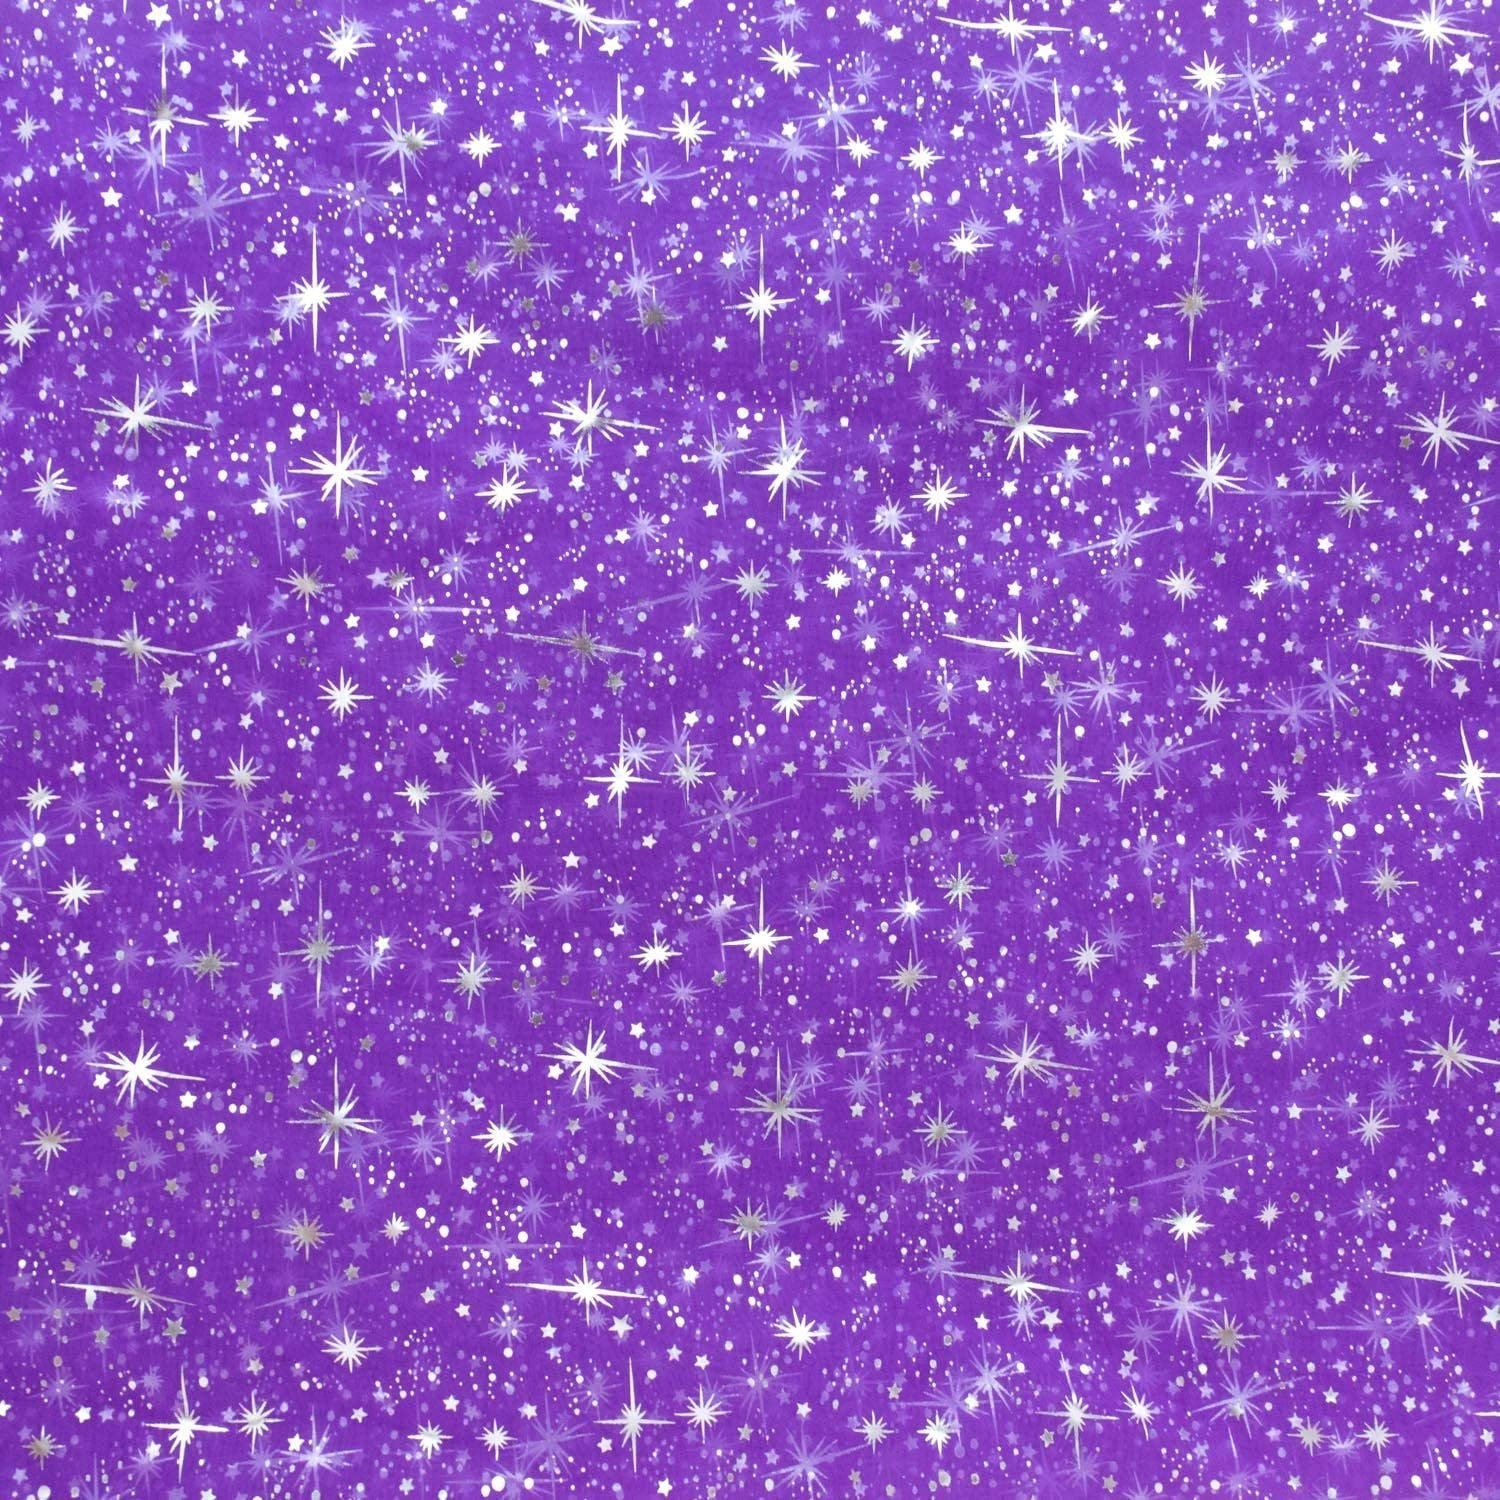 Foil Star Organza - Silver On Purple - 60 Sheer Silver Star Organza F